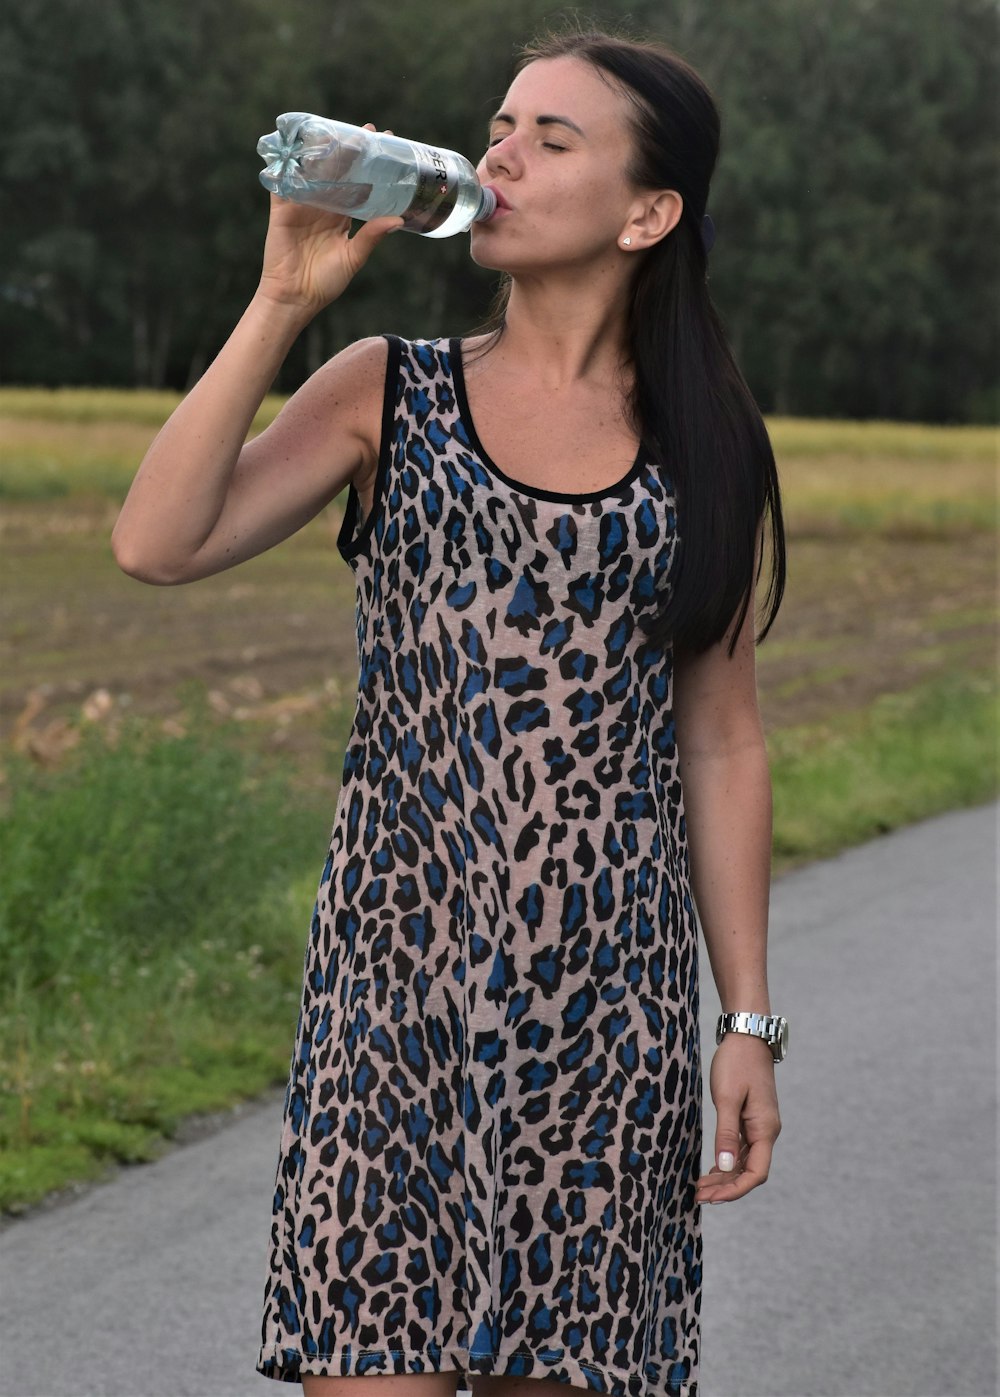 A woman in a leopard print dress drinking from a water bottle